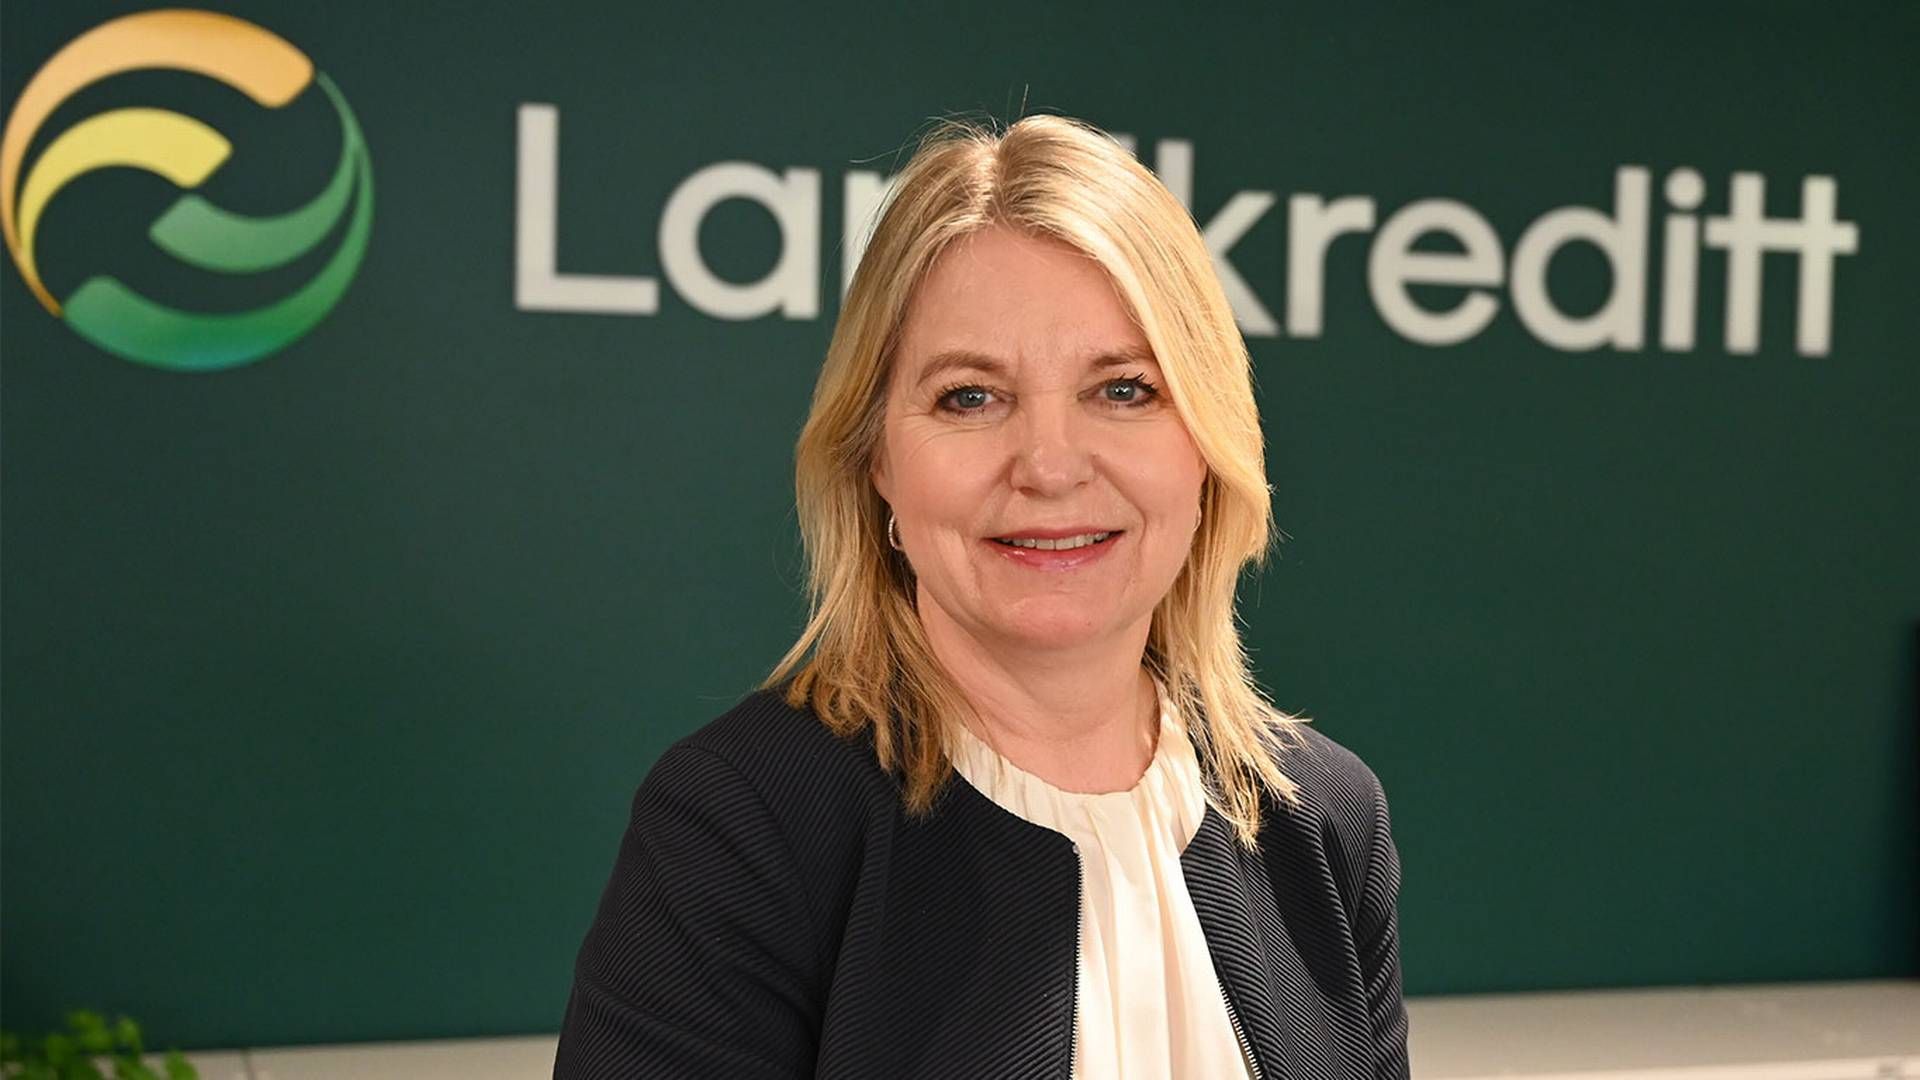 NY STYRELEDER: Bjørg Marit Eknes er ny styreleder i Landkreditt bank. | Foto: Landkreditt